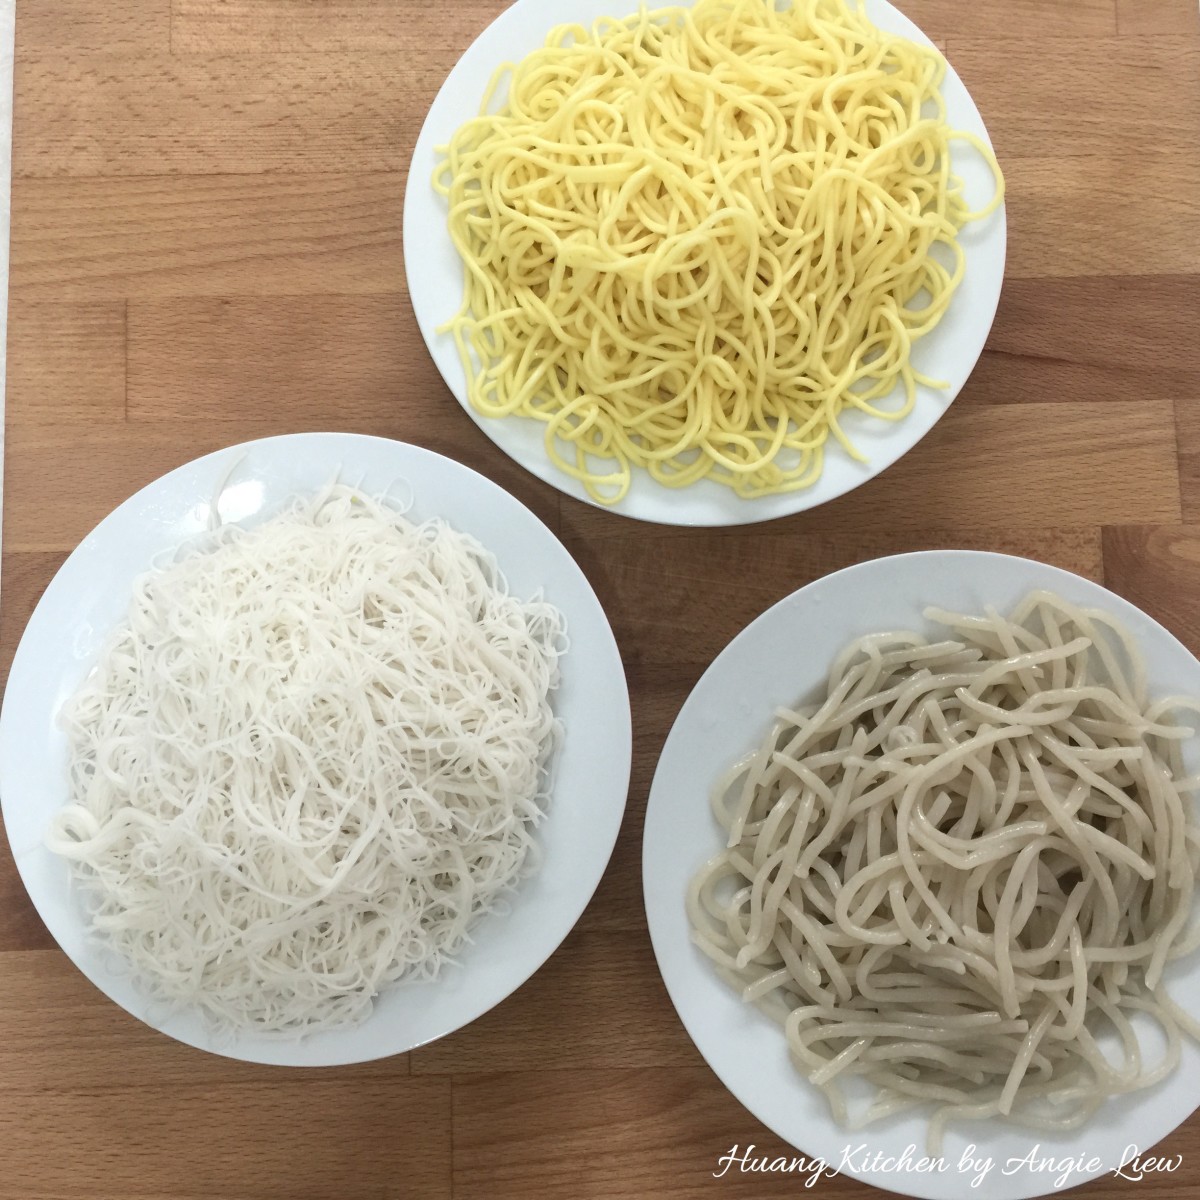 Traditional Sarawak Laksa - blanch noodles